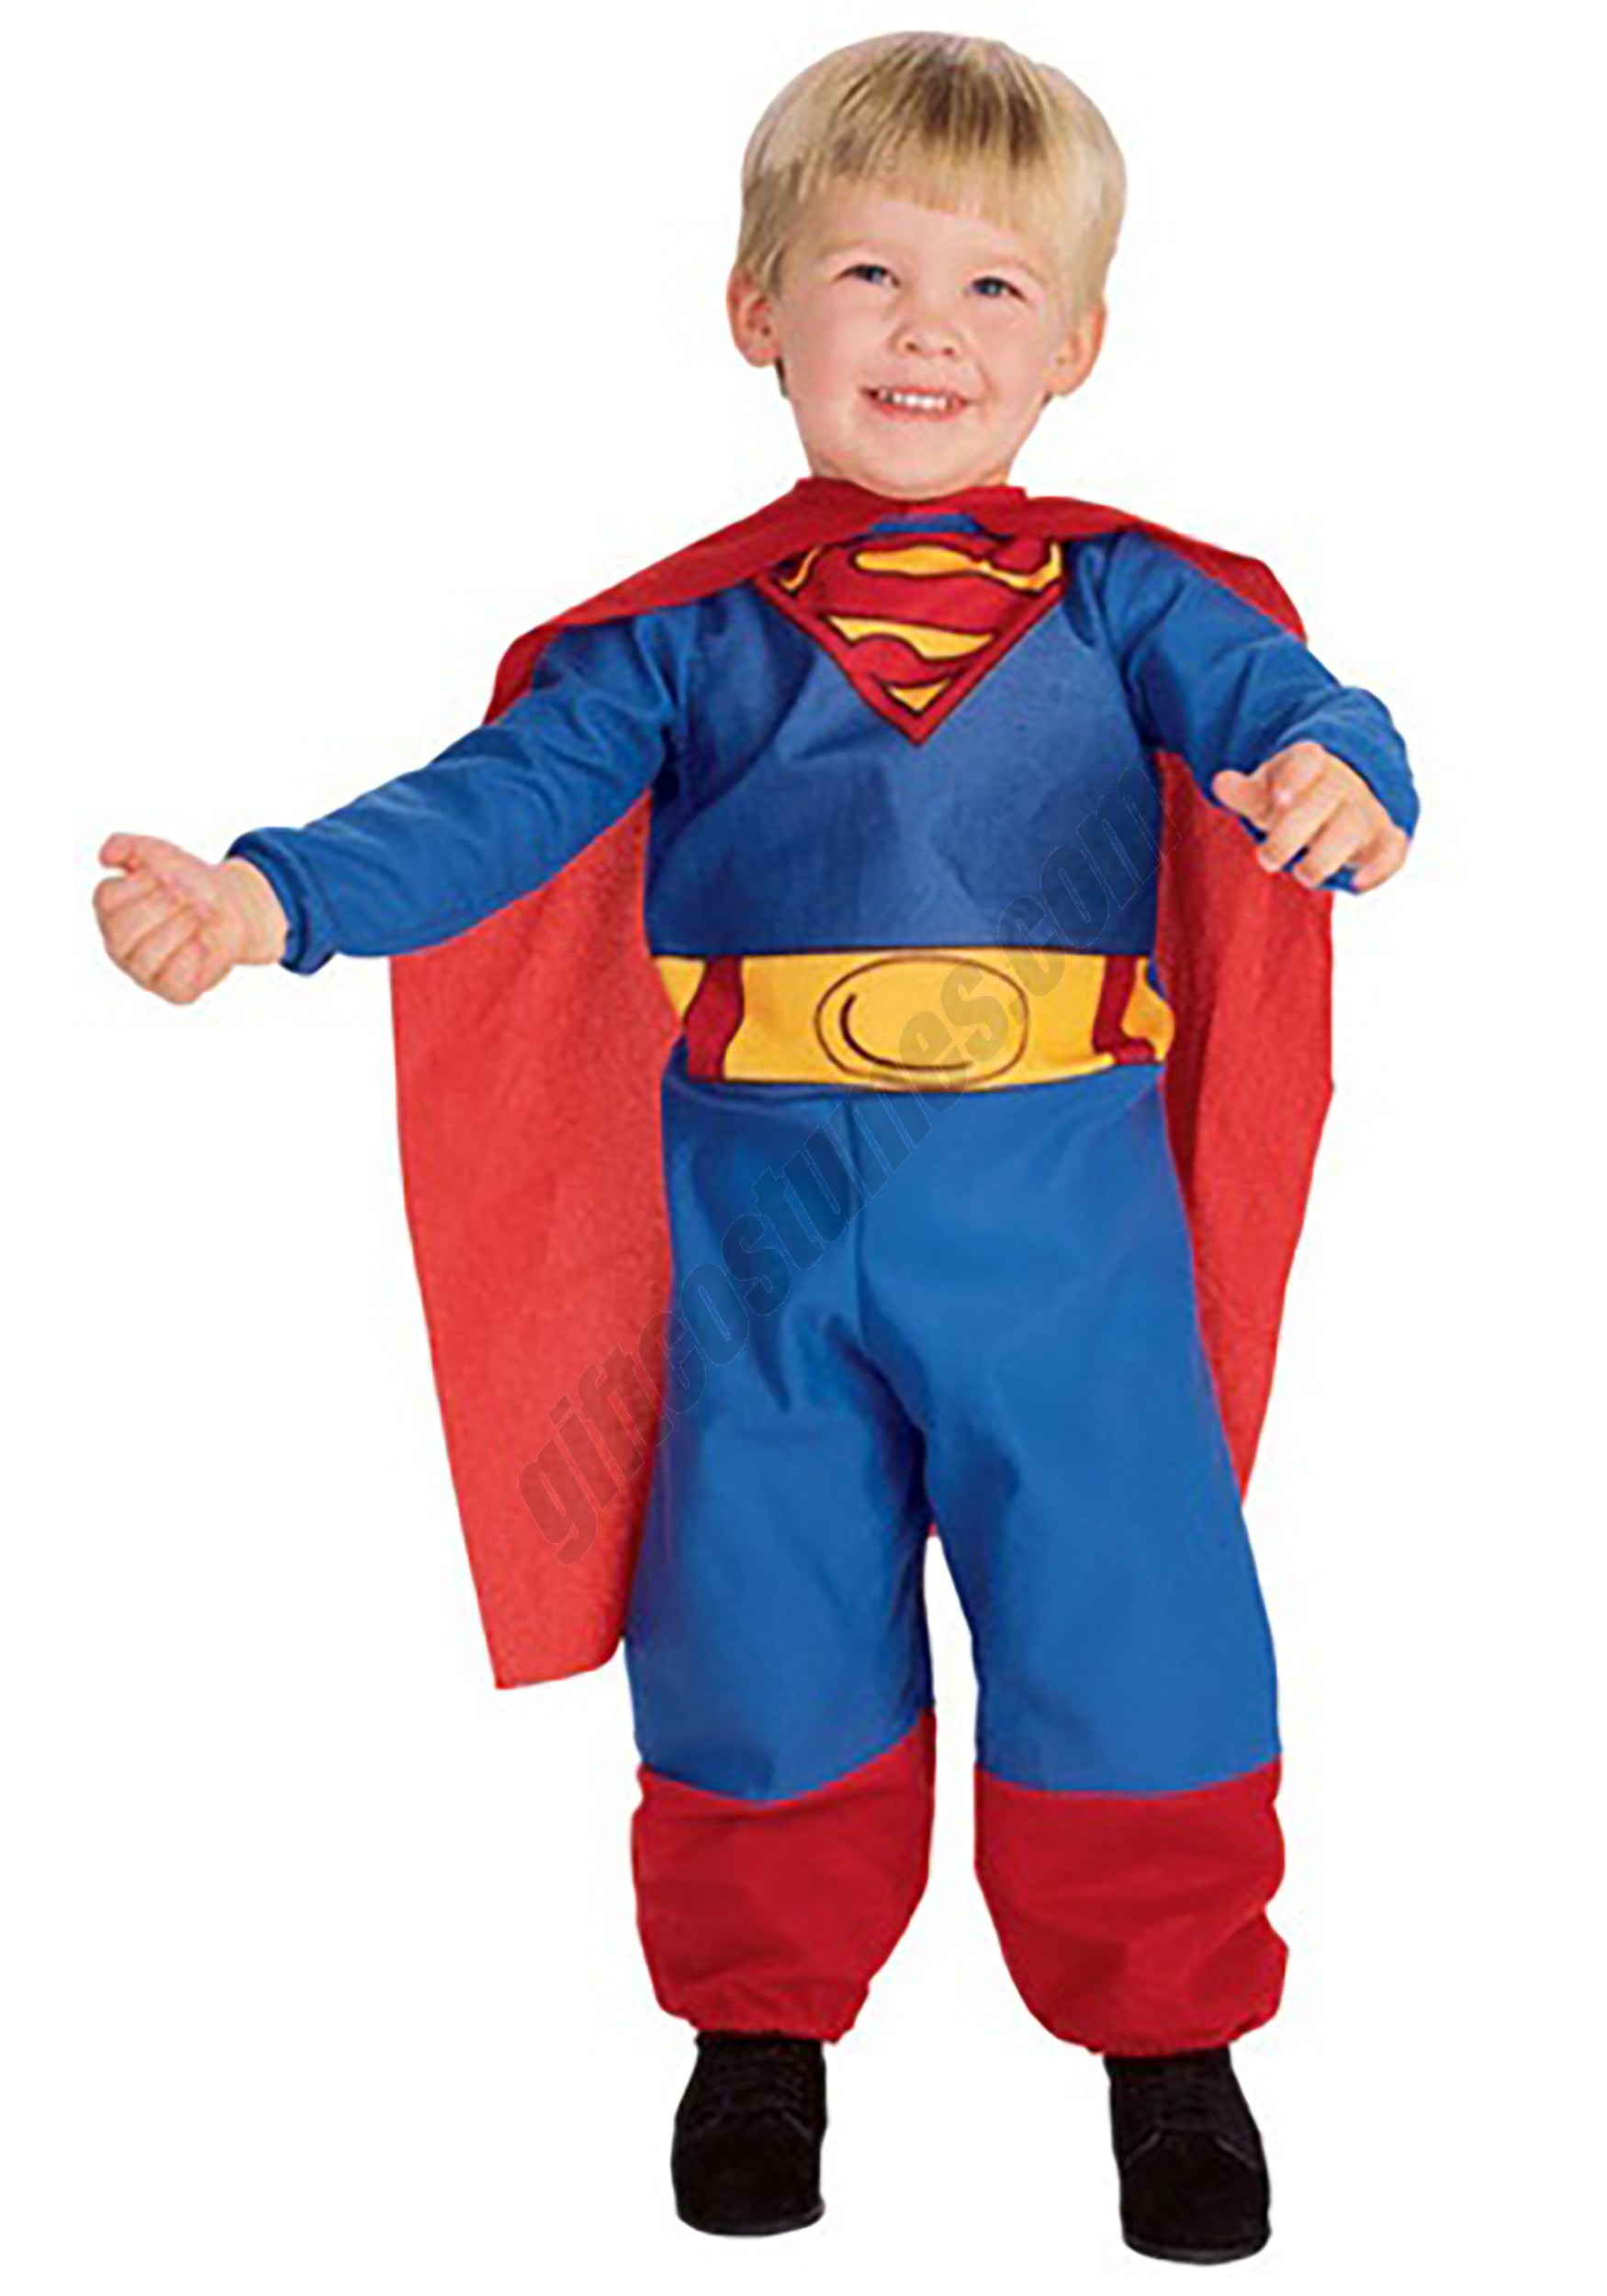 Infant / Toddler Superman Costume Promotions - Infant / Toddler Superman Costume Promotions